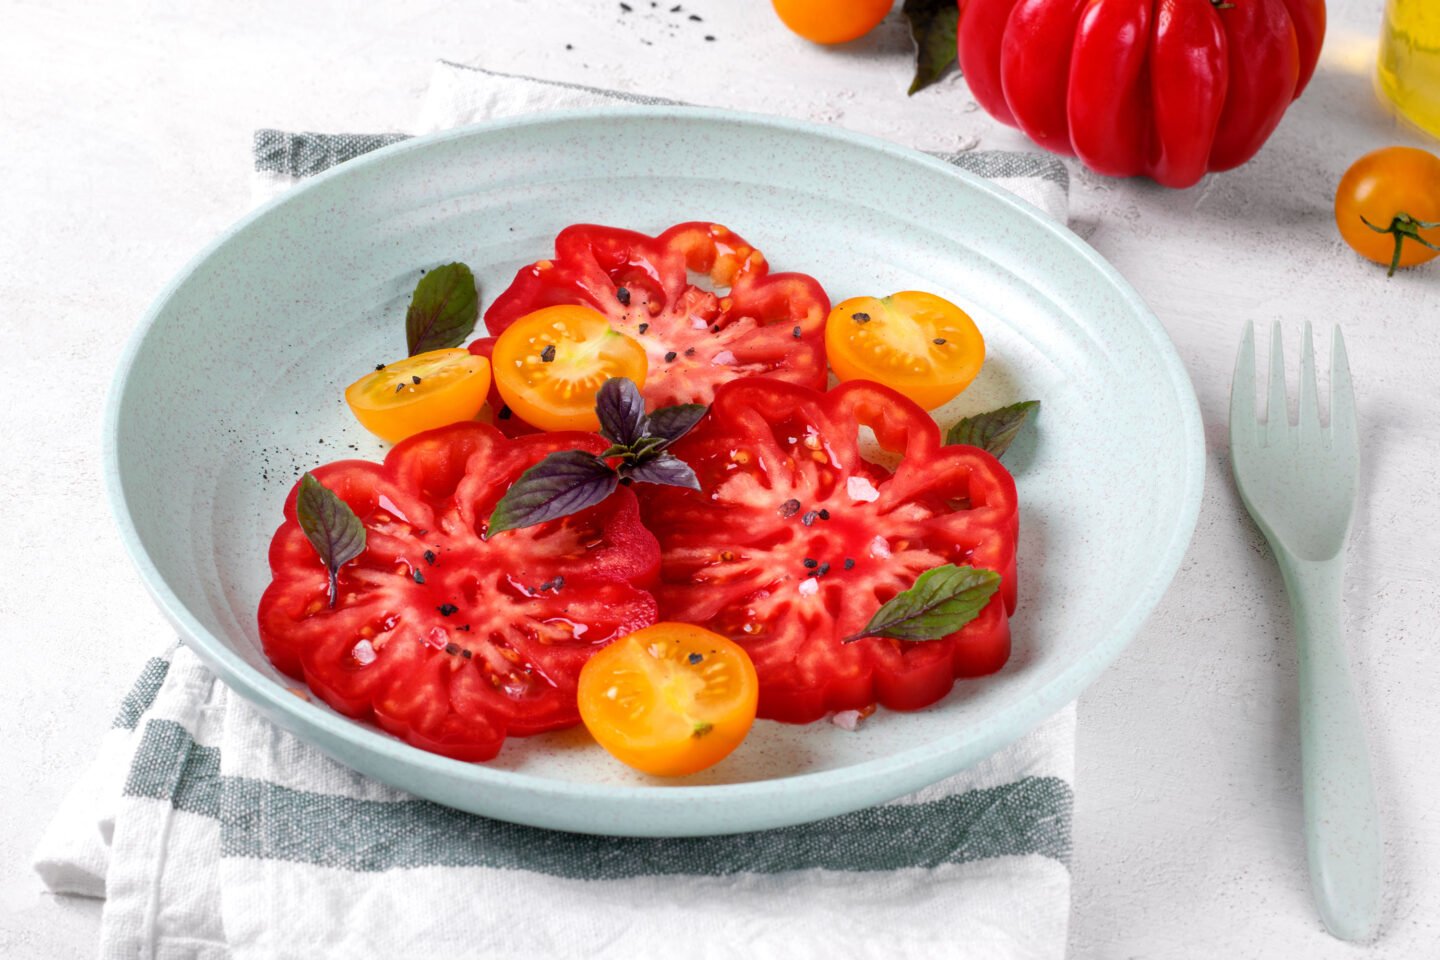 tomato salad with red ridged beefsteak variety